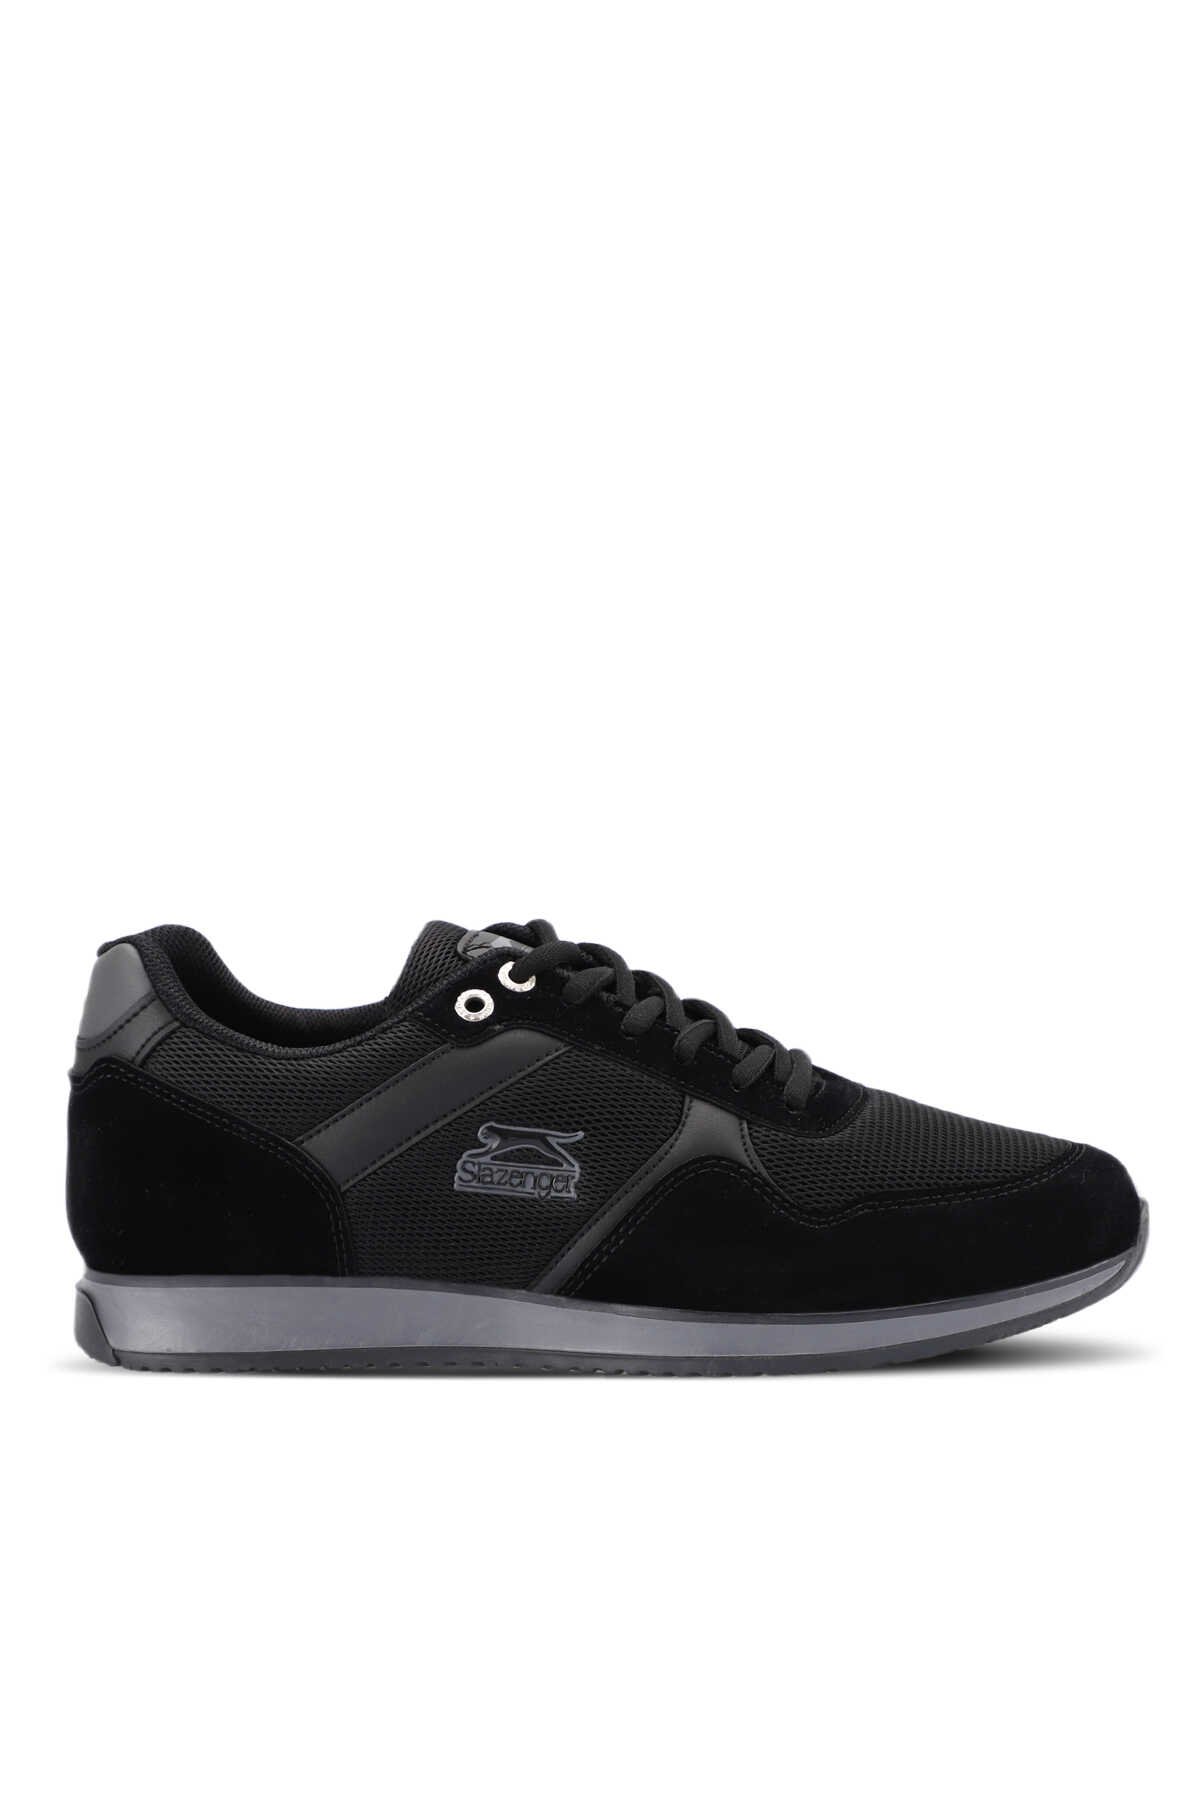 Slazenger - Slazenger OLIVIERA I Sneaker Erkek Ayakkabı Siyah / Siyah